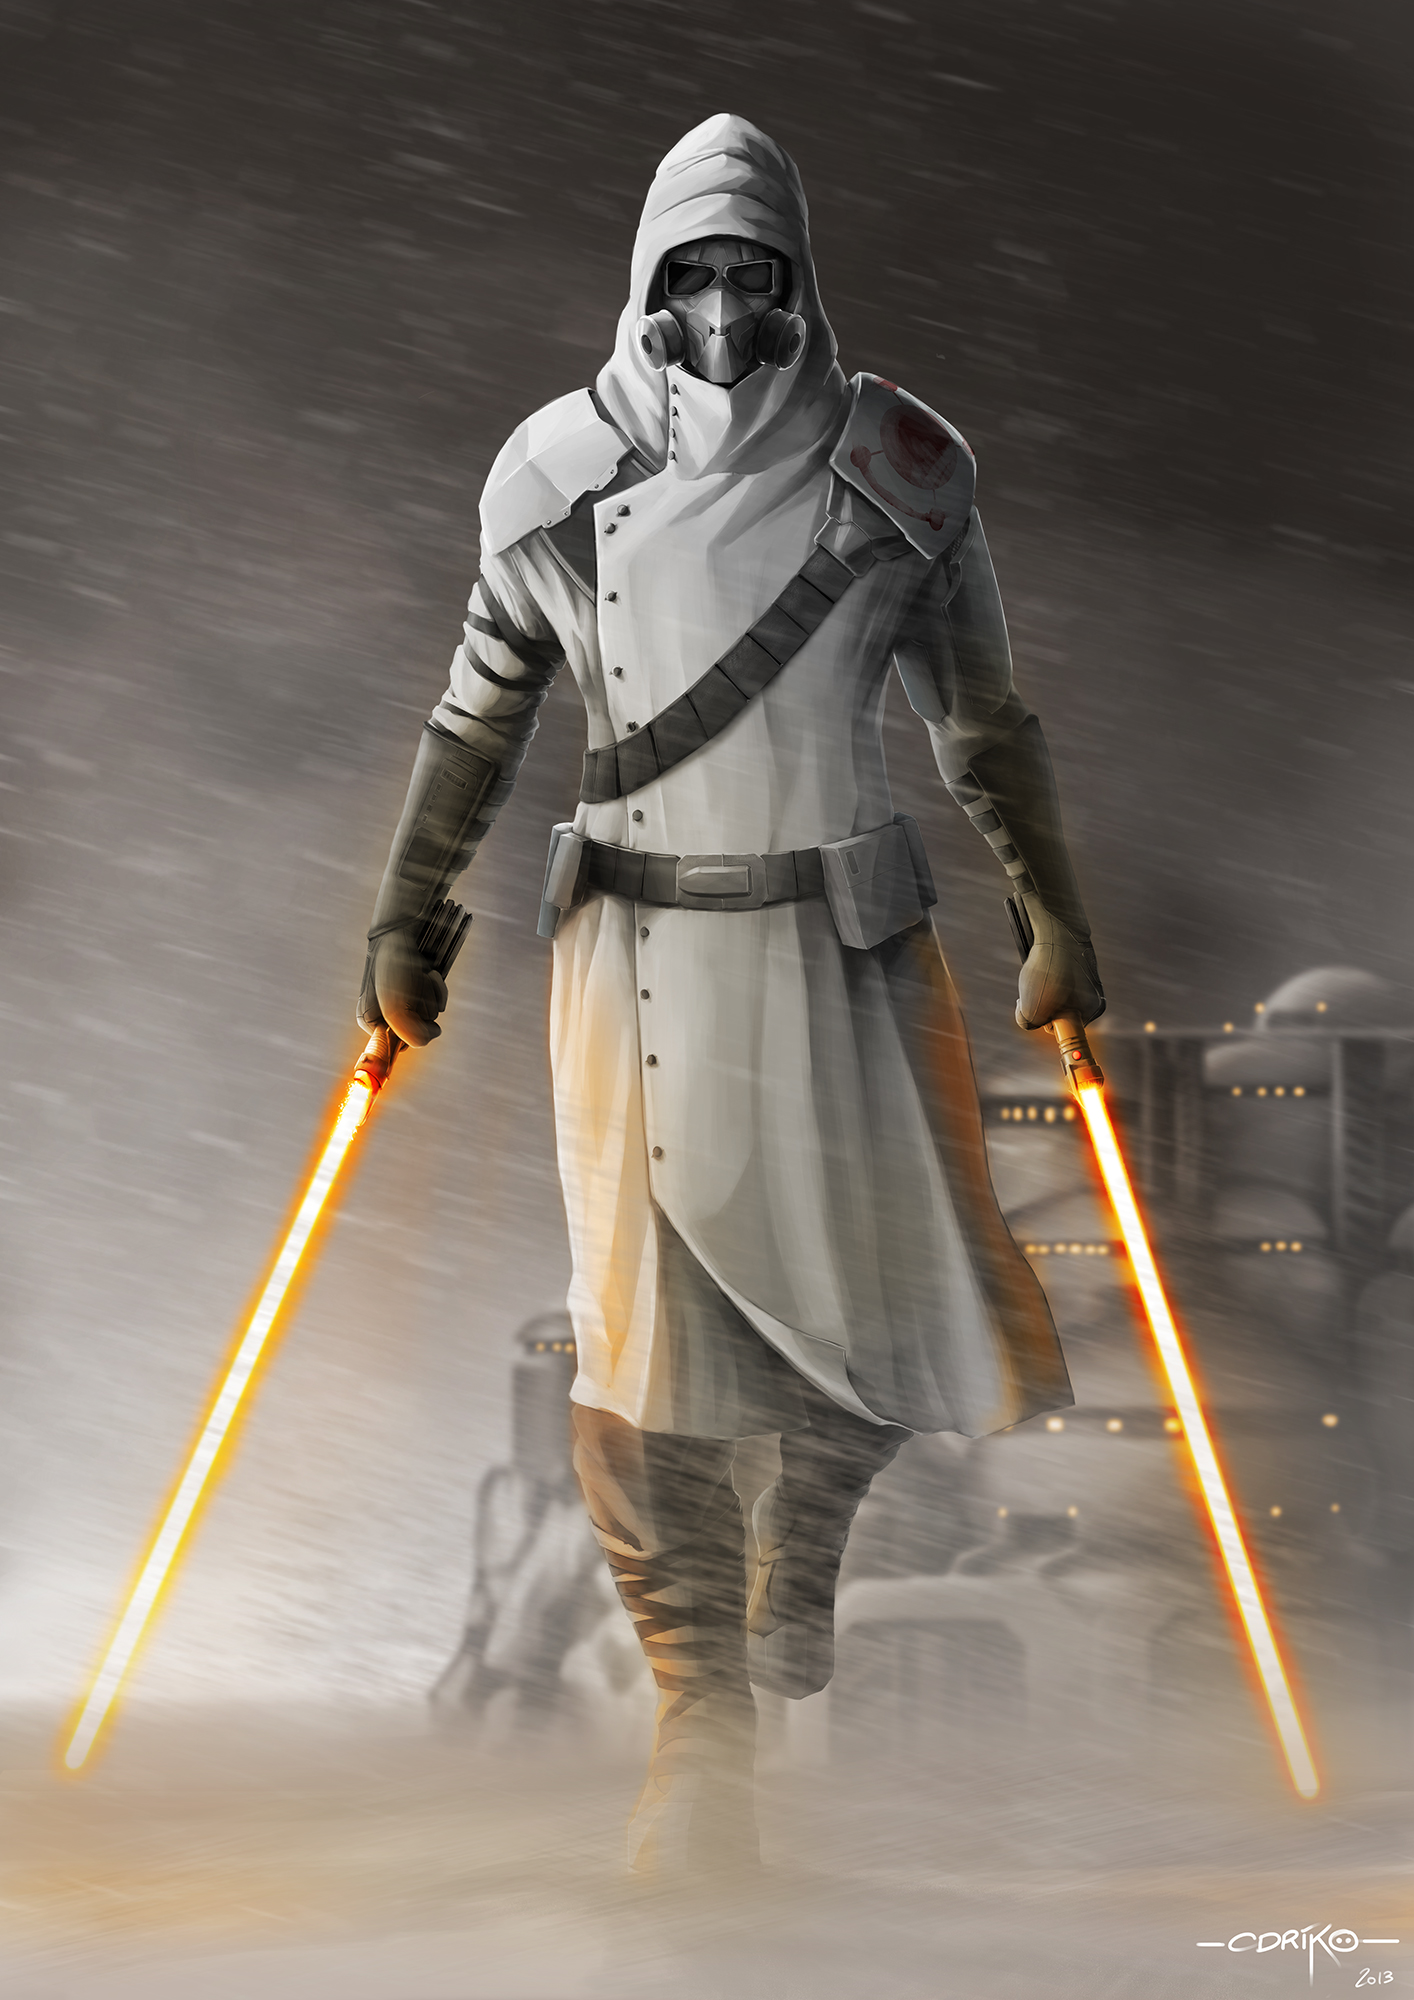 14 Gray Jedi in the Star Wars Universe - IGN